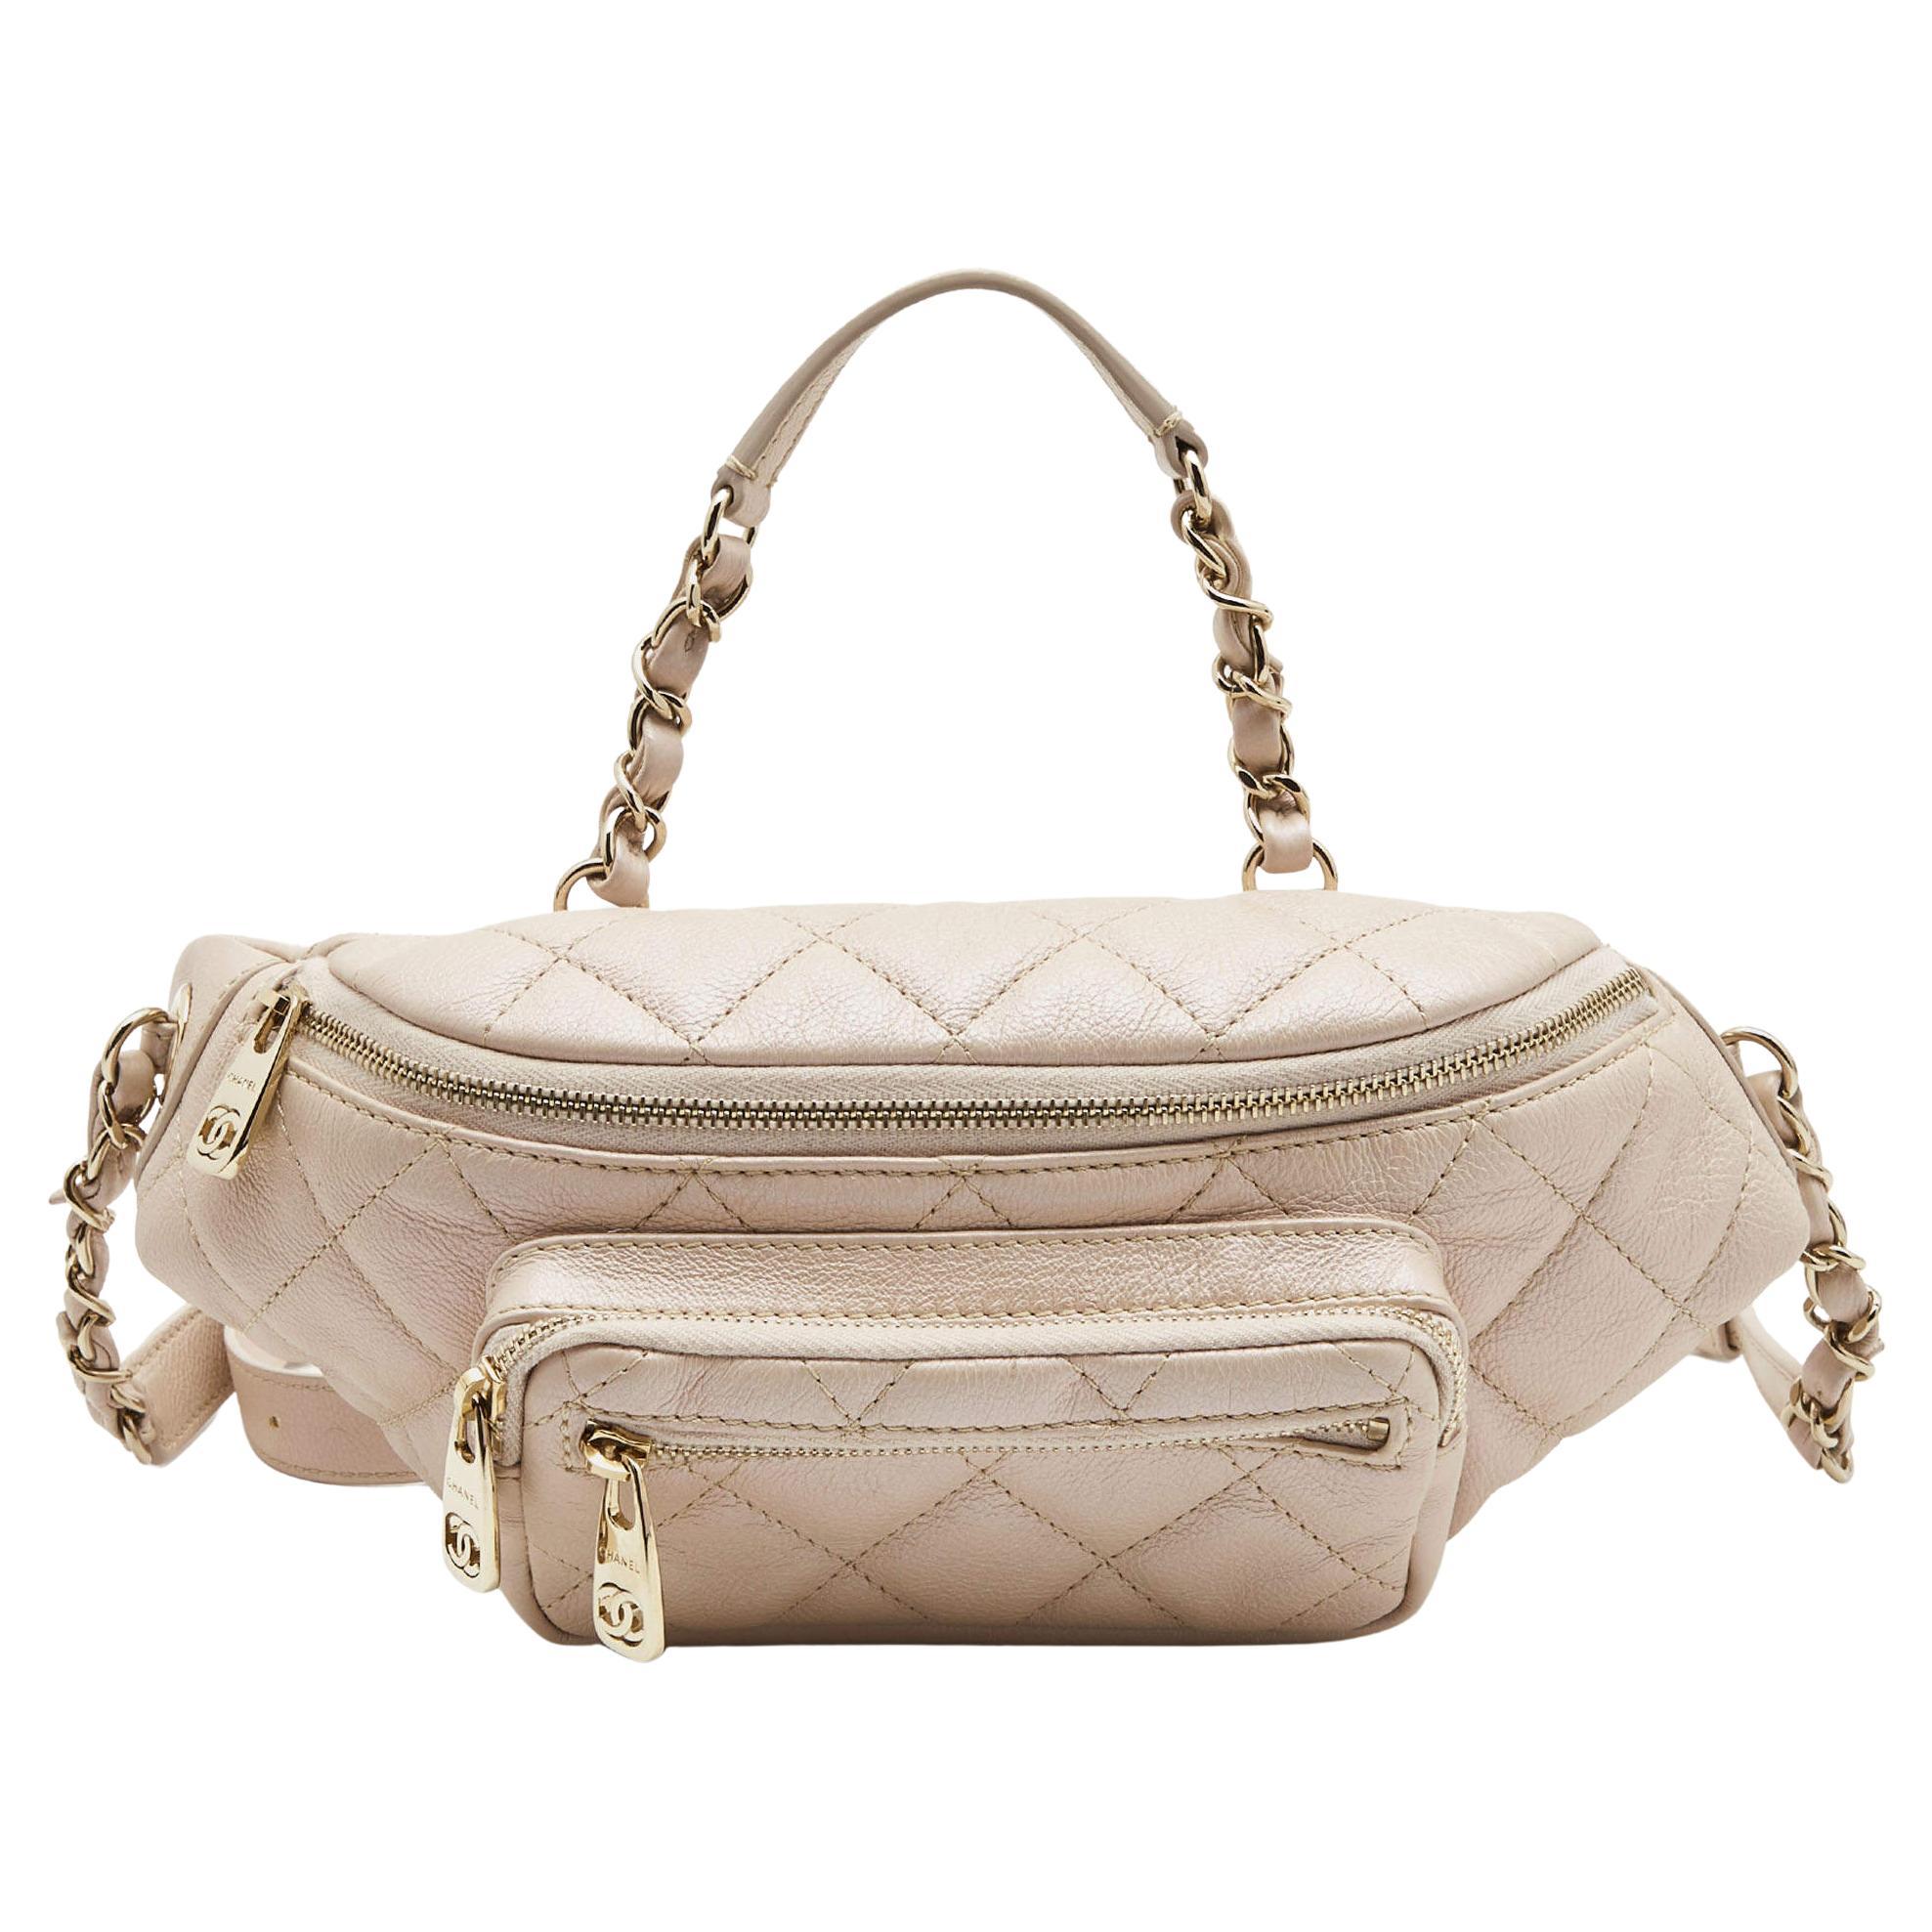 Chanel Beige Quilted Shimmer Leather Fanny Pack Waistbelt Bag